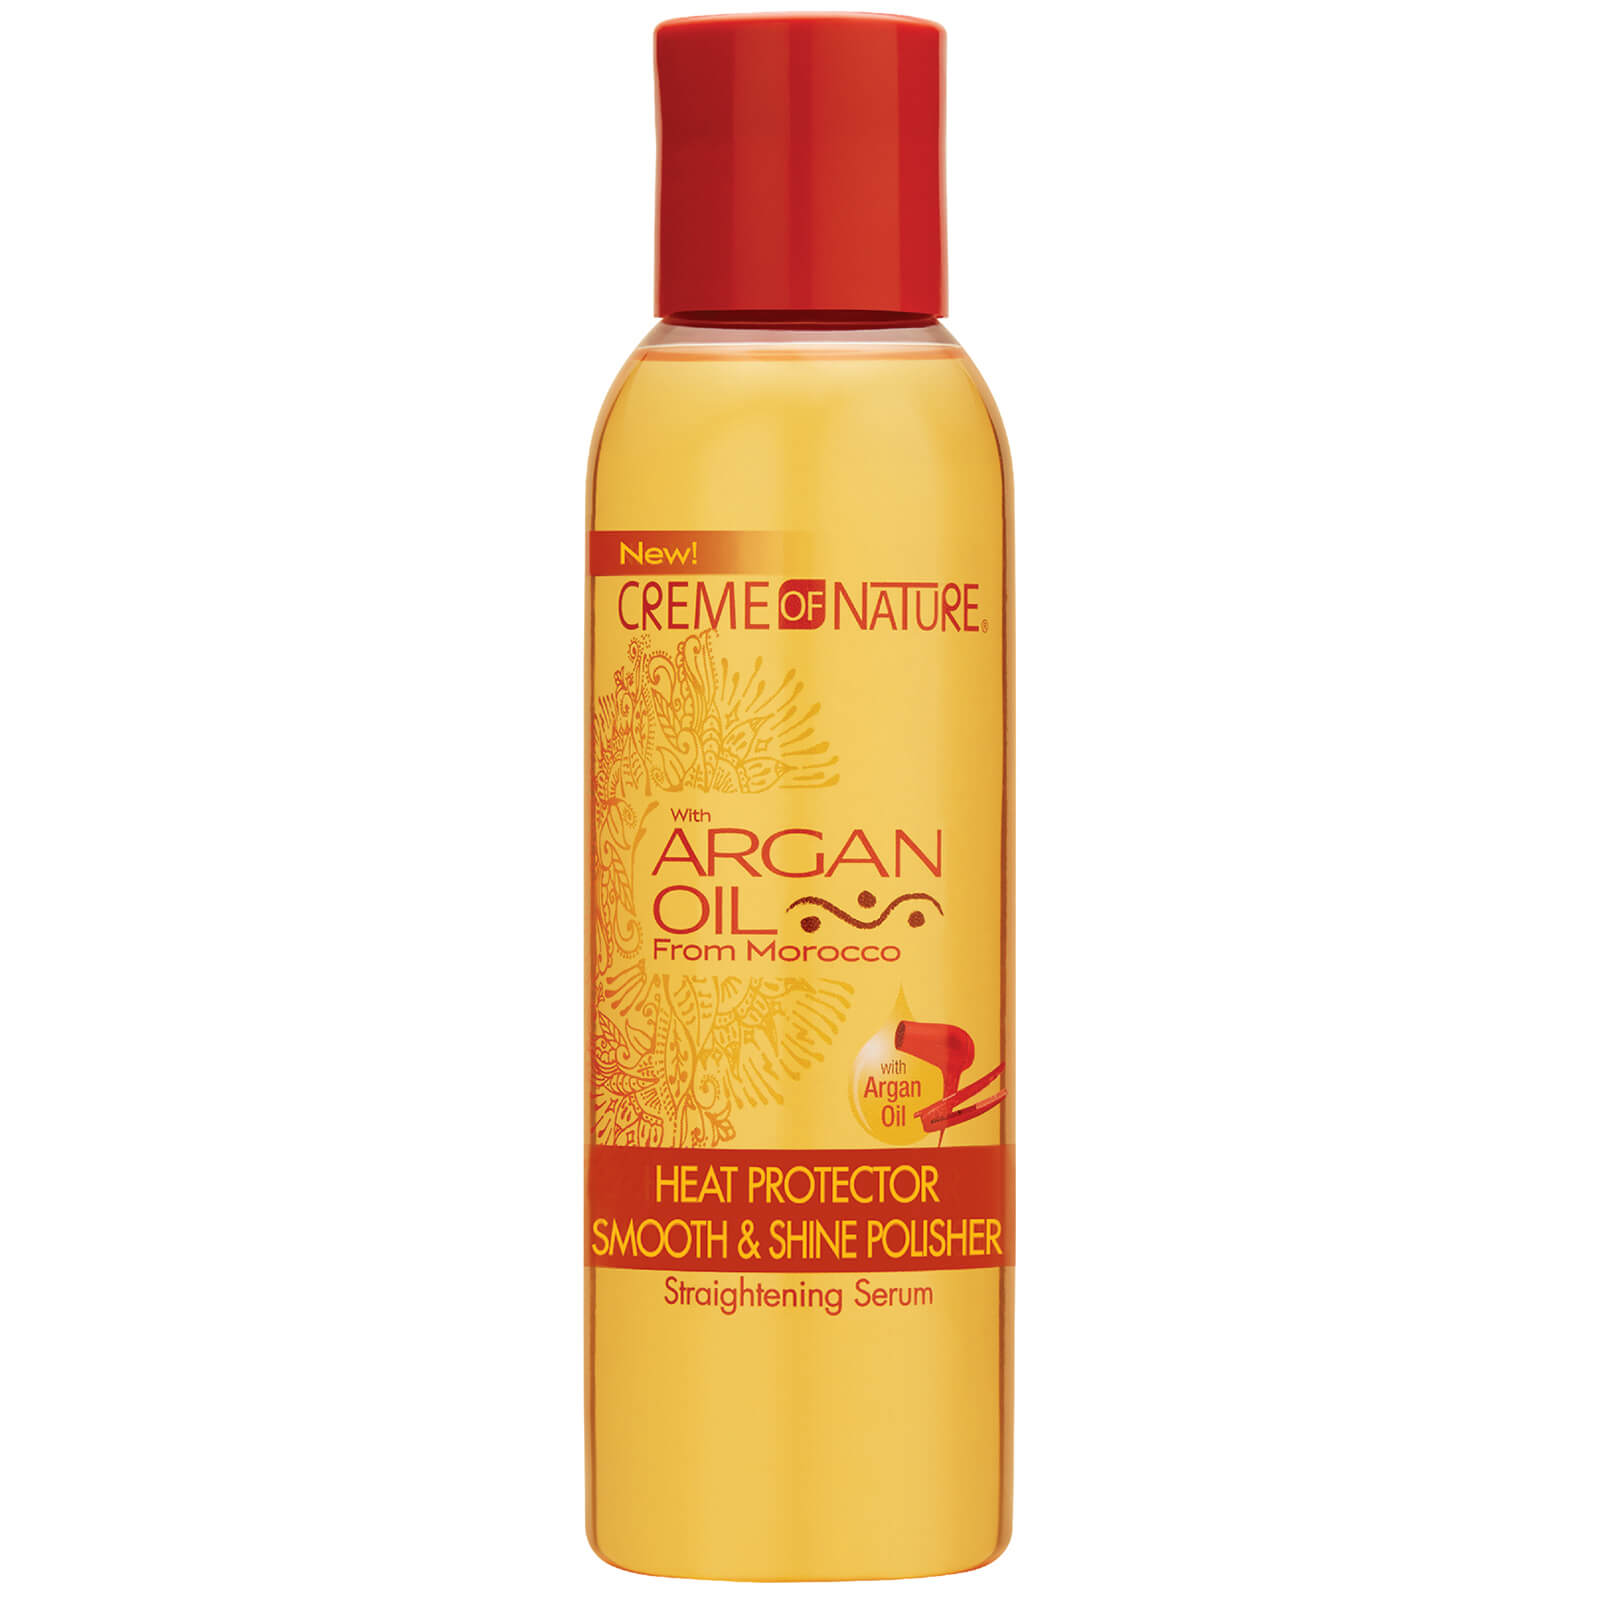 Crème of Nature Argan Oil Heat Protector Smooth & Shine Polisher 114ml lookfantastic.com imagine